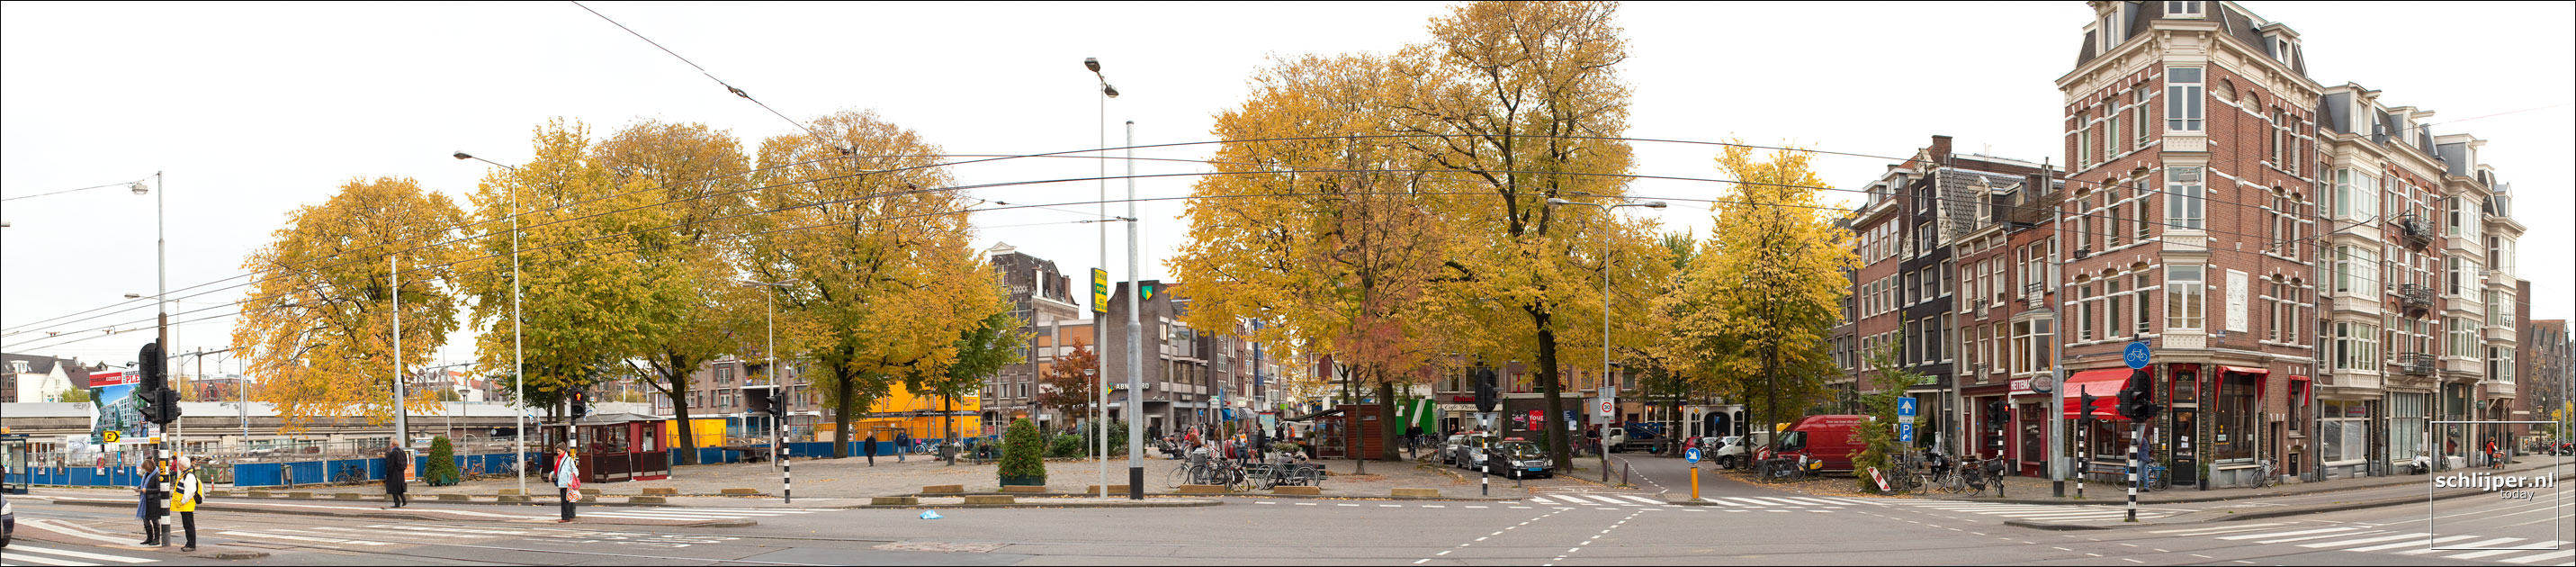 Nederland, Amsterdam, 29 oktober 2010